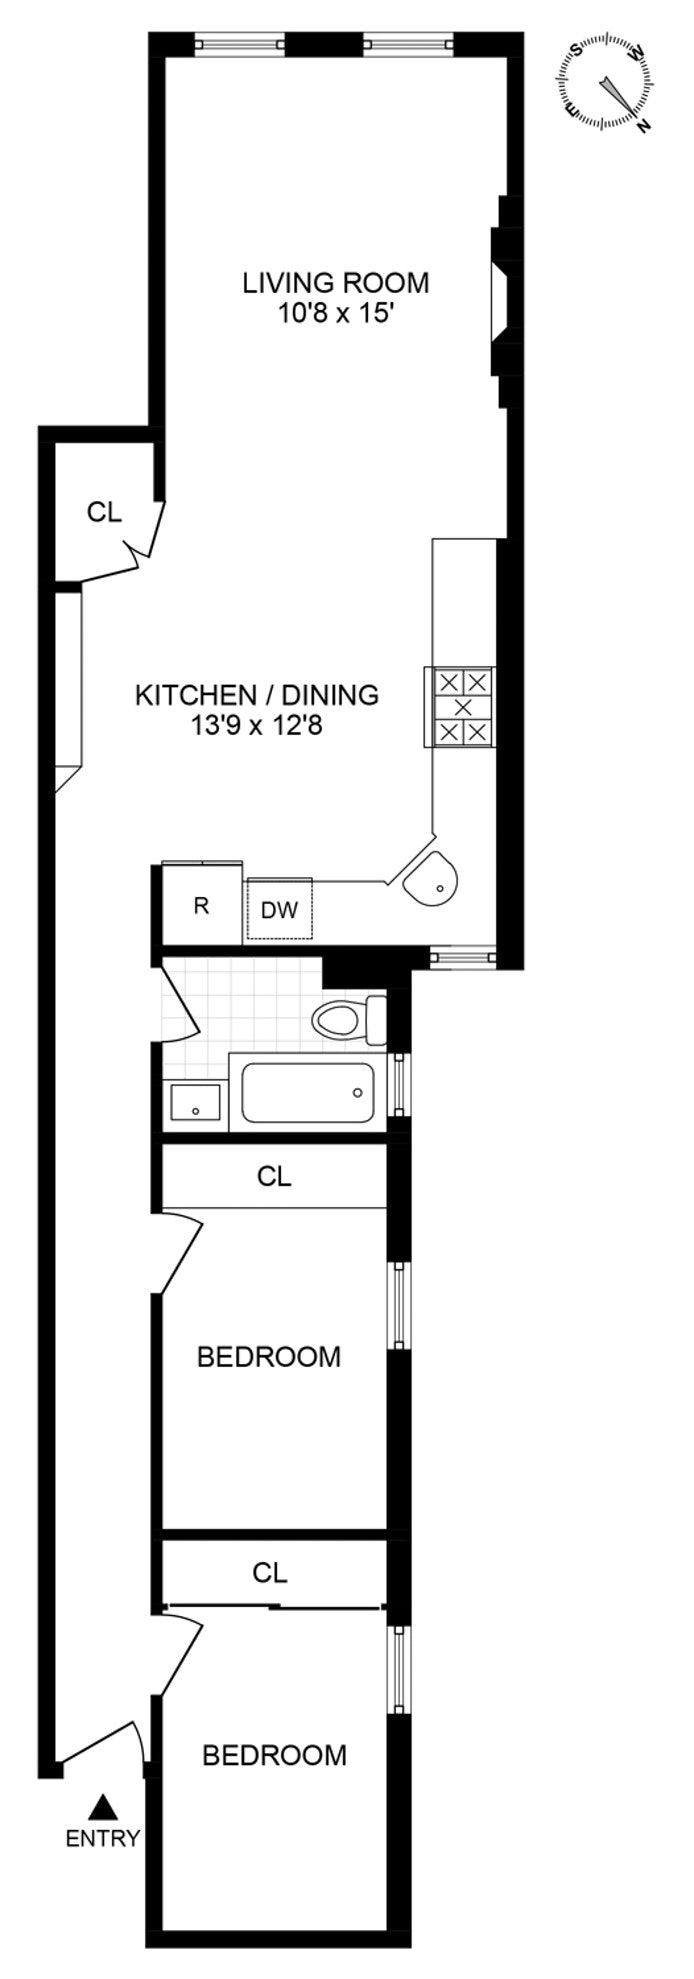 Floorplan for 231 West 21st Street, 5B